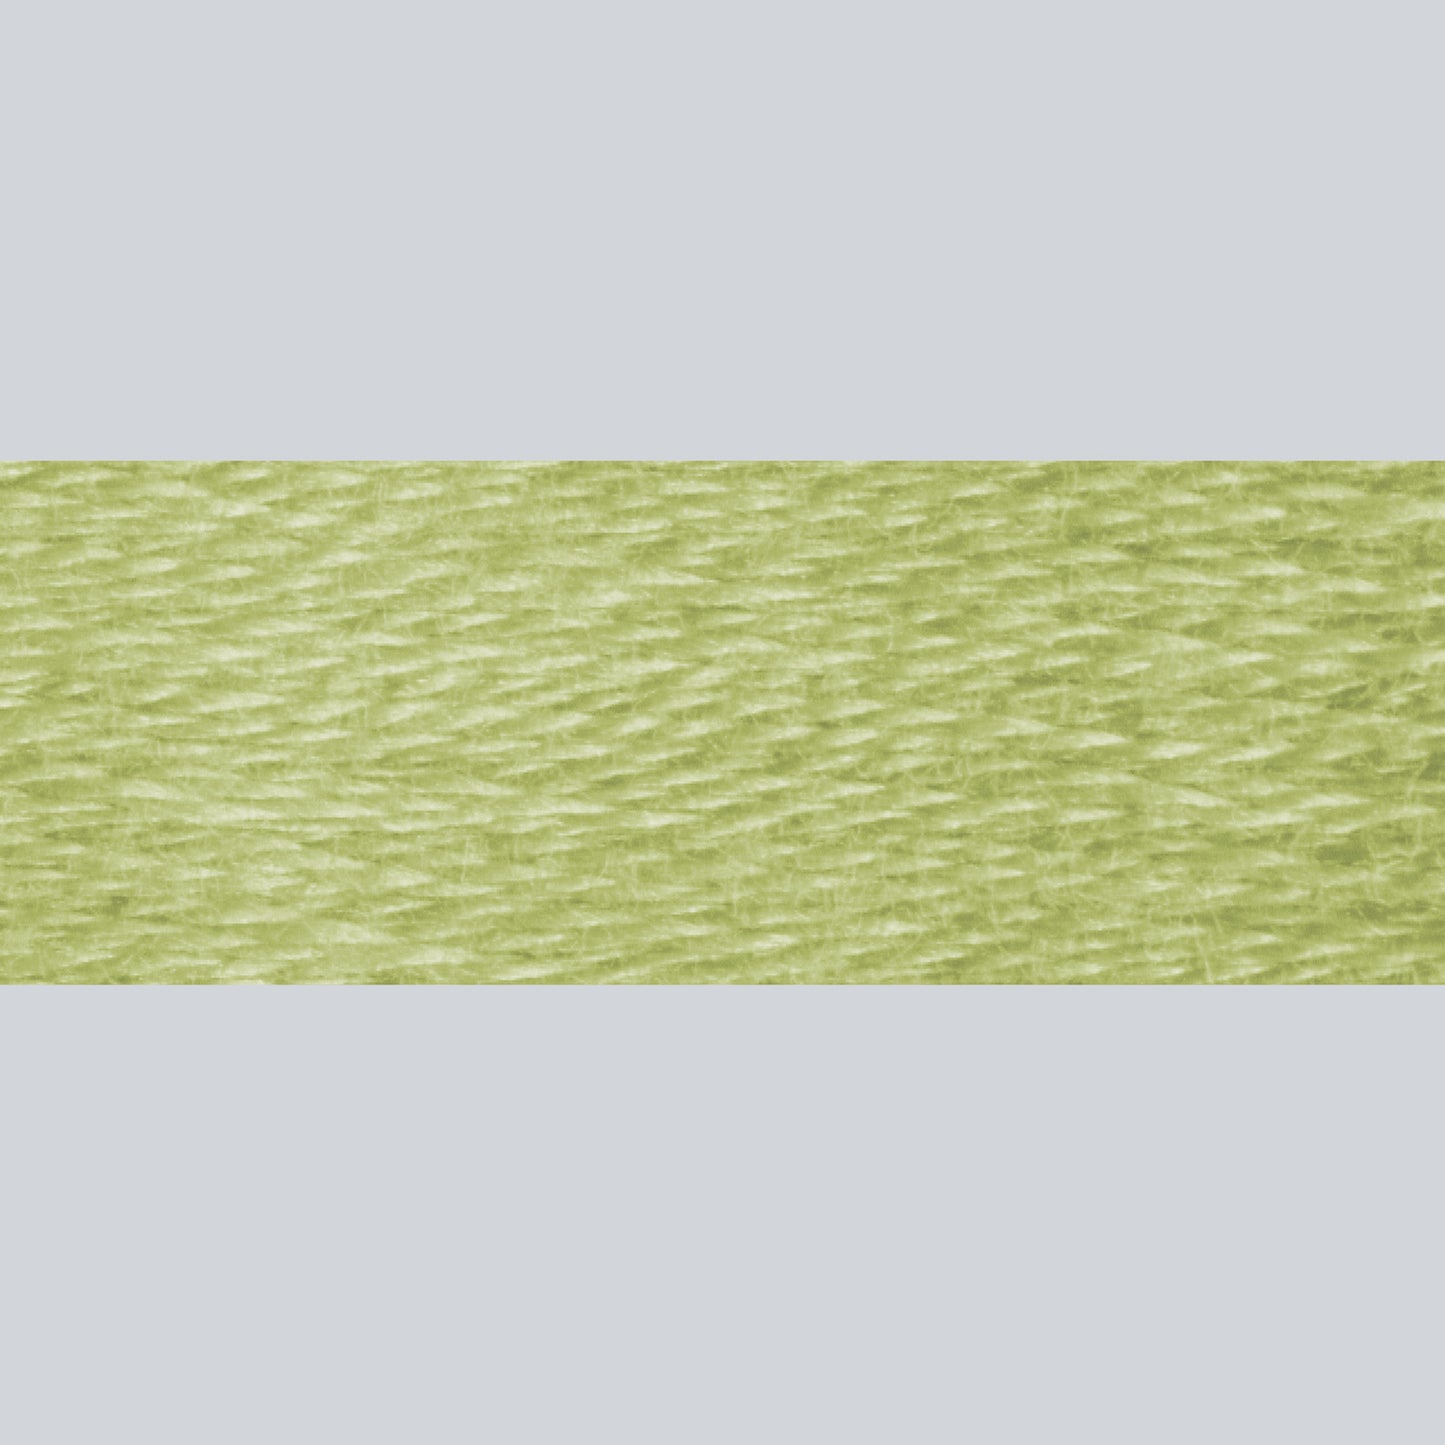 DMC Embroidery Floss - 3013 Light Khaki Green Alternative View #1